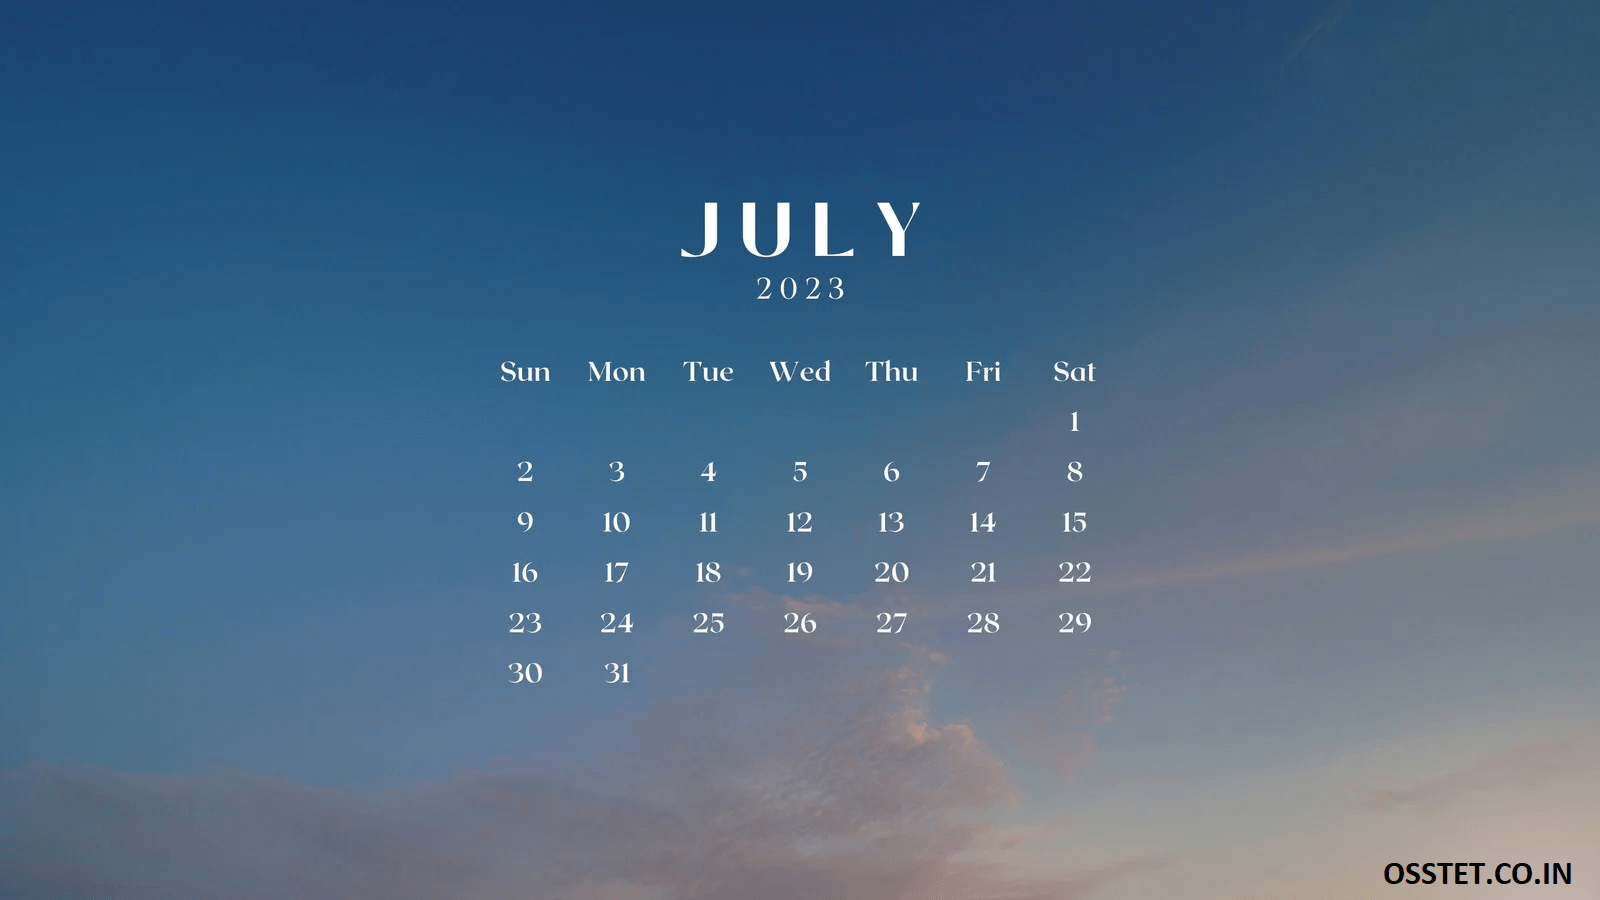 Free August 2018 wallpaper calendars  Flipsnack Blog